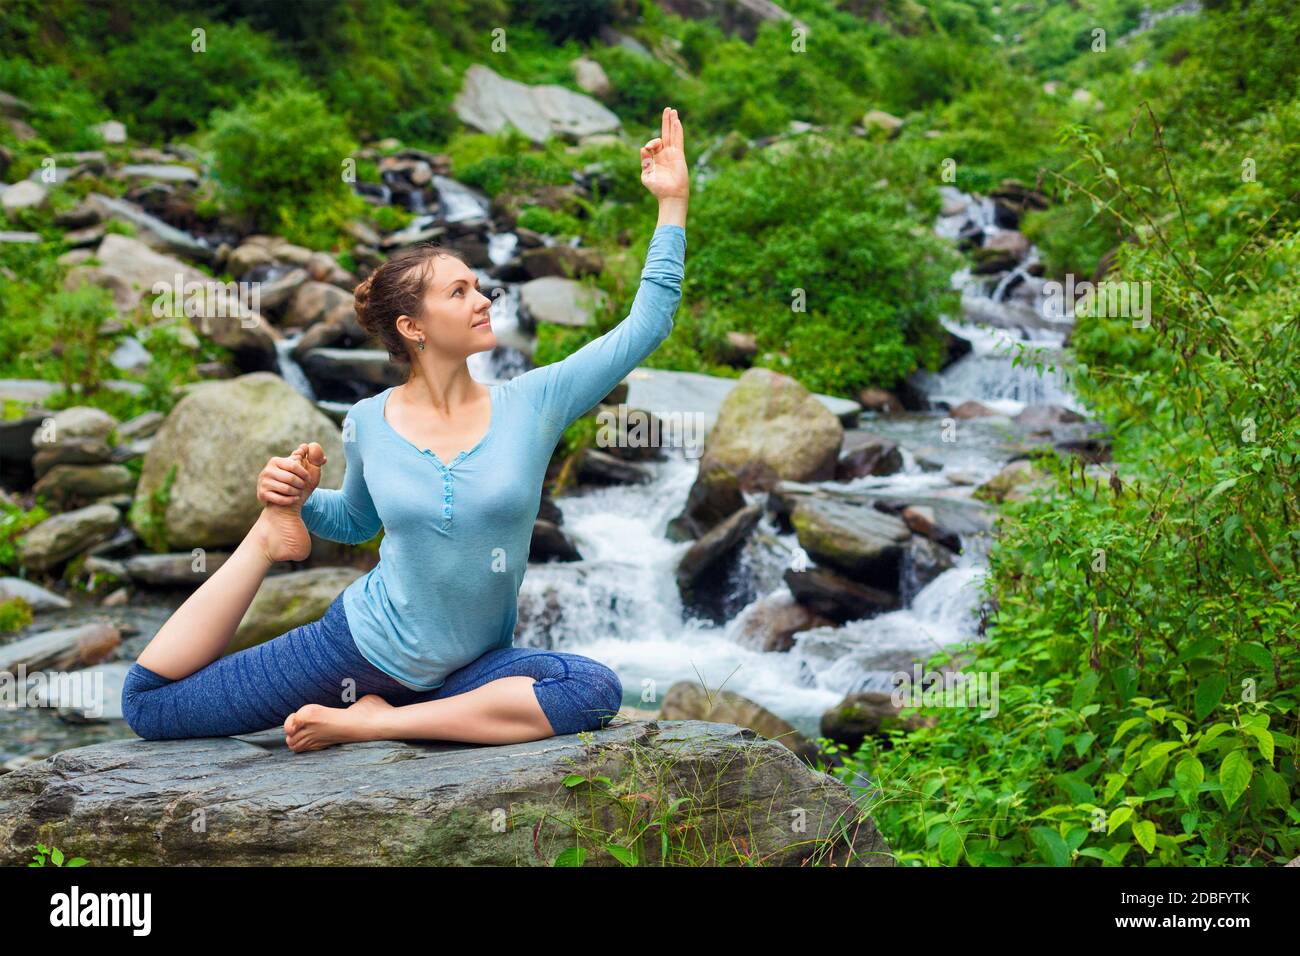 Hatha Yoga Outdoor - junge sportliche fit Frau macht Yoga asana Eka pada rajakapotasana - einbeinige Königstaube Pose am tropischen Wasserfall. Himachal Pr Stockfoto